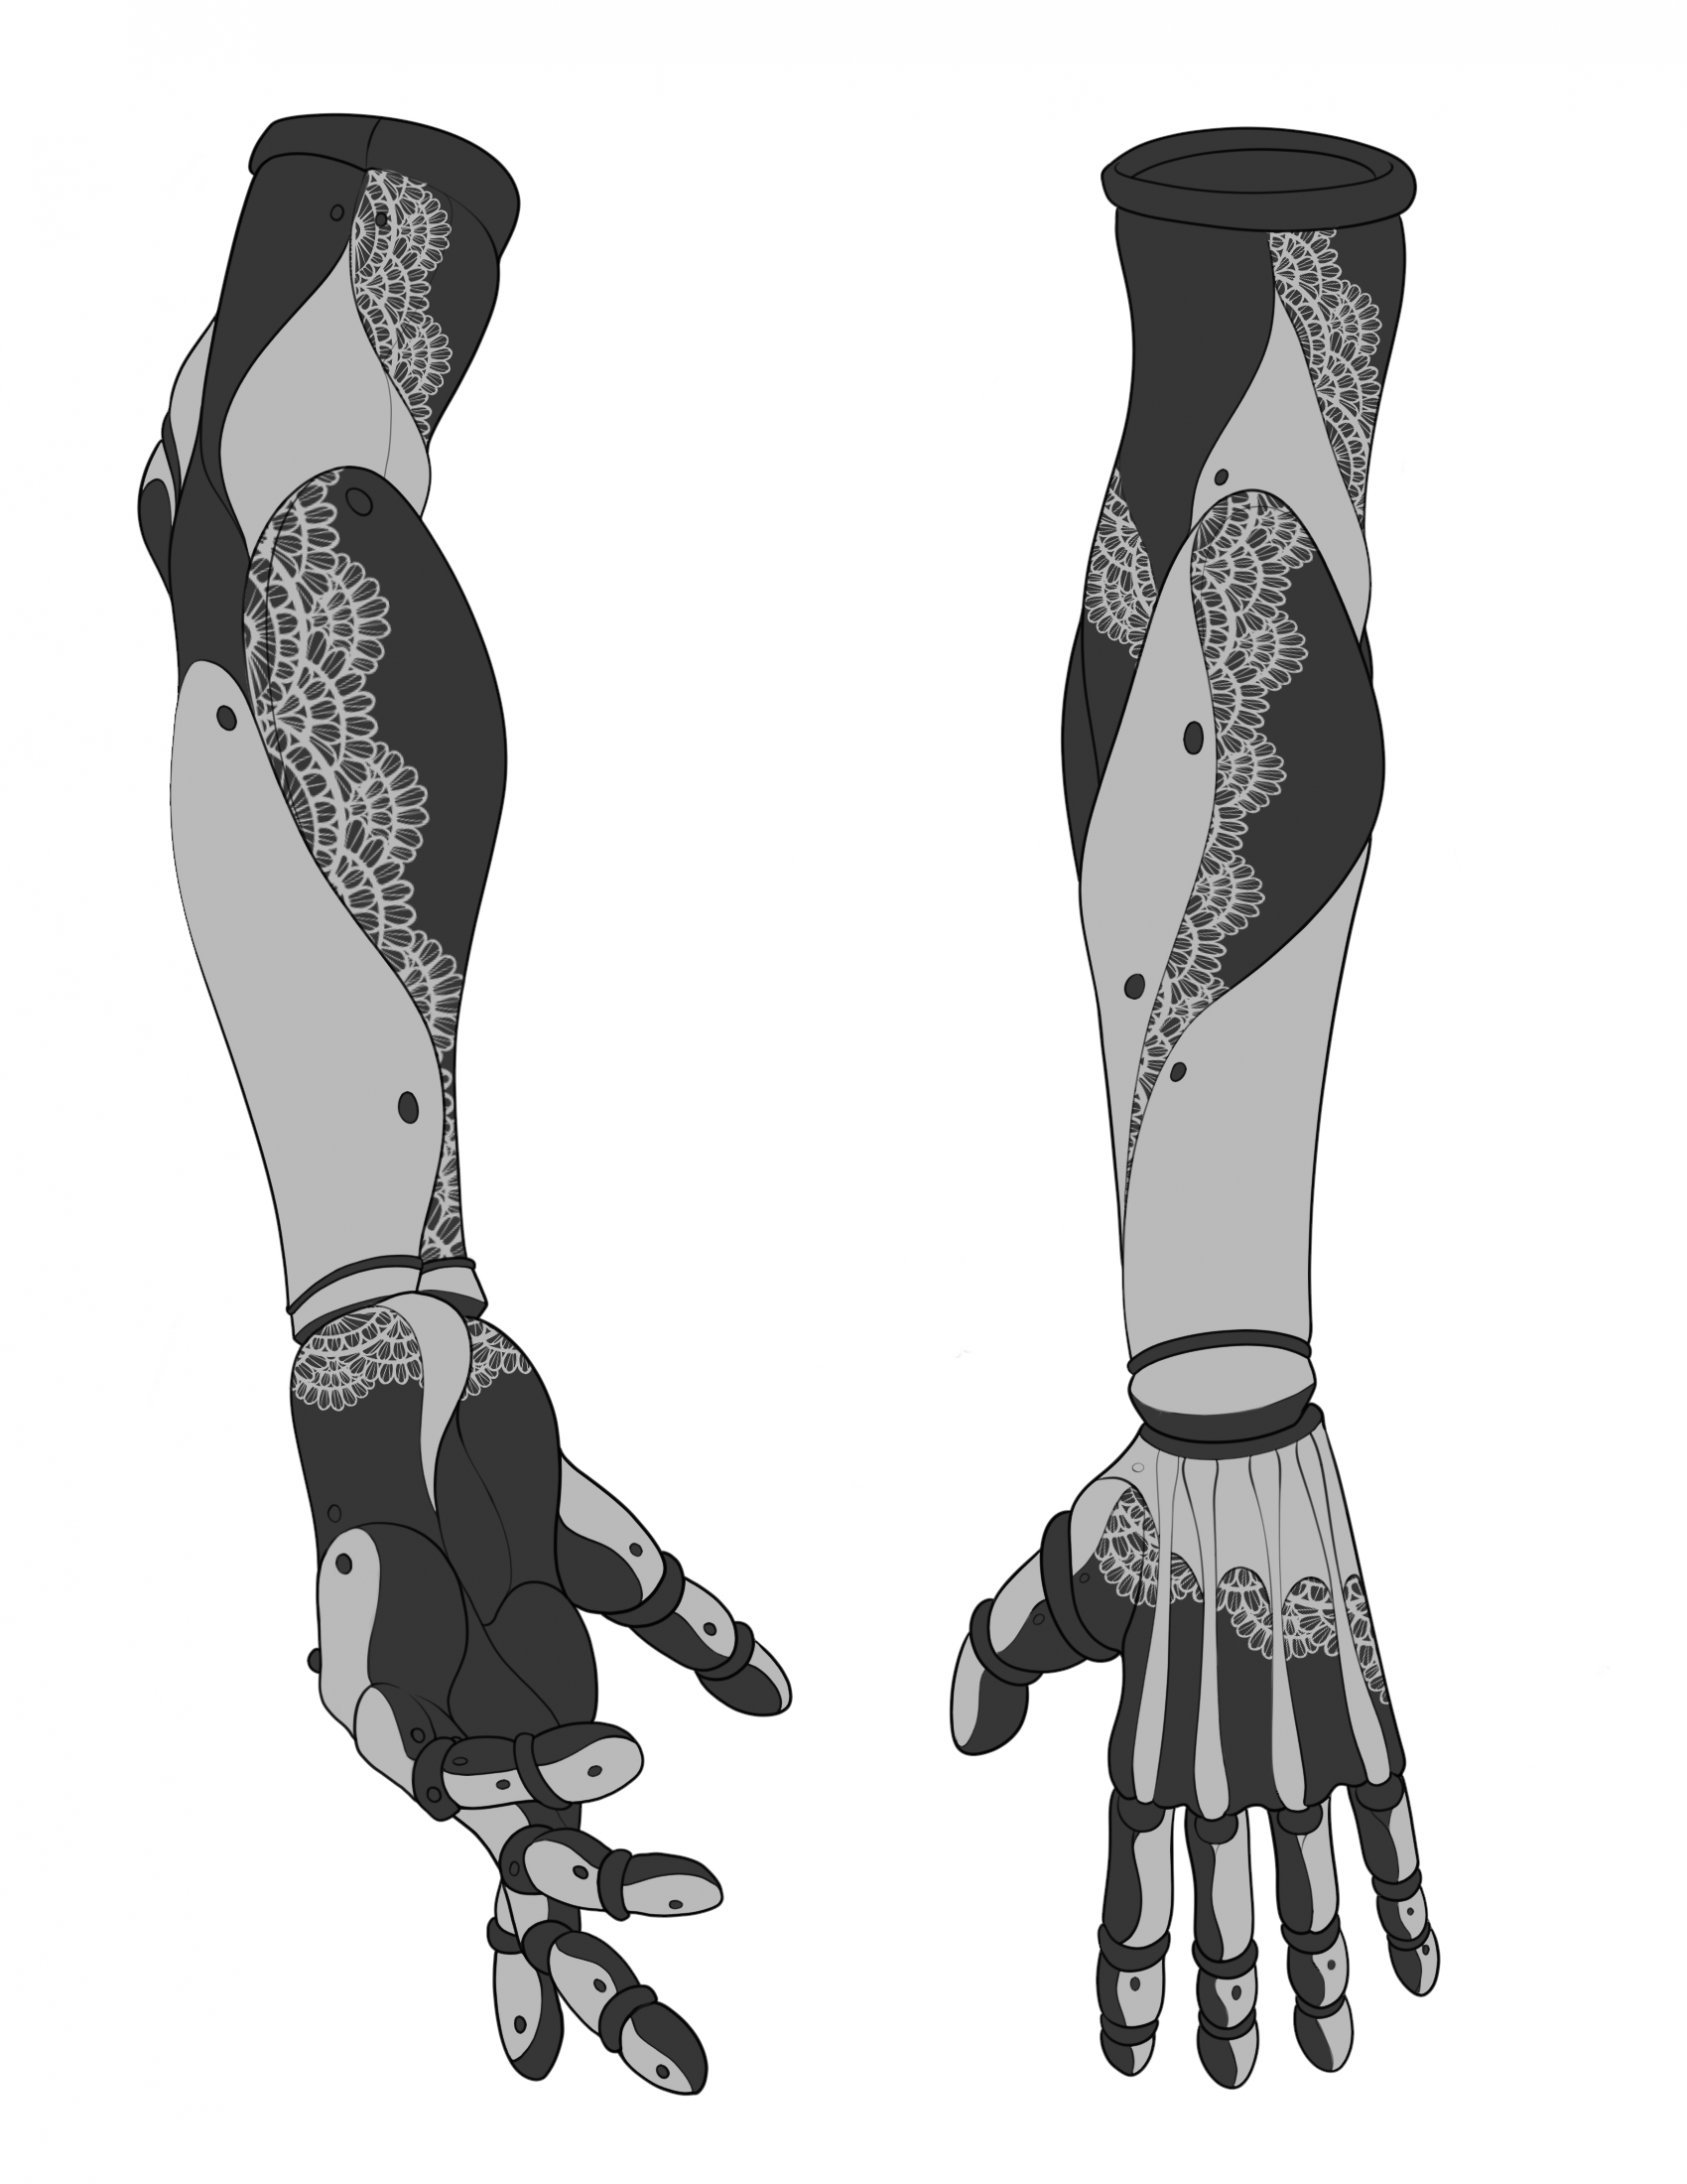 biomechanical arm drawings